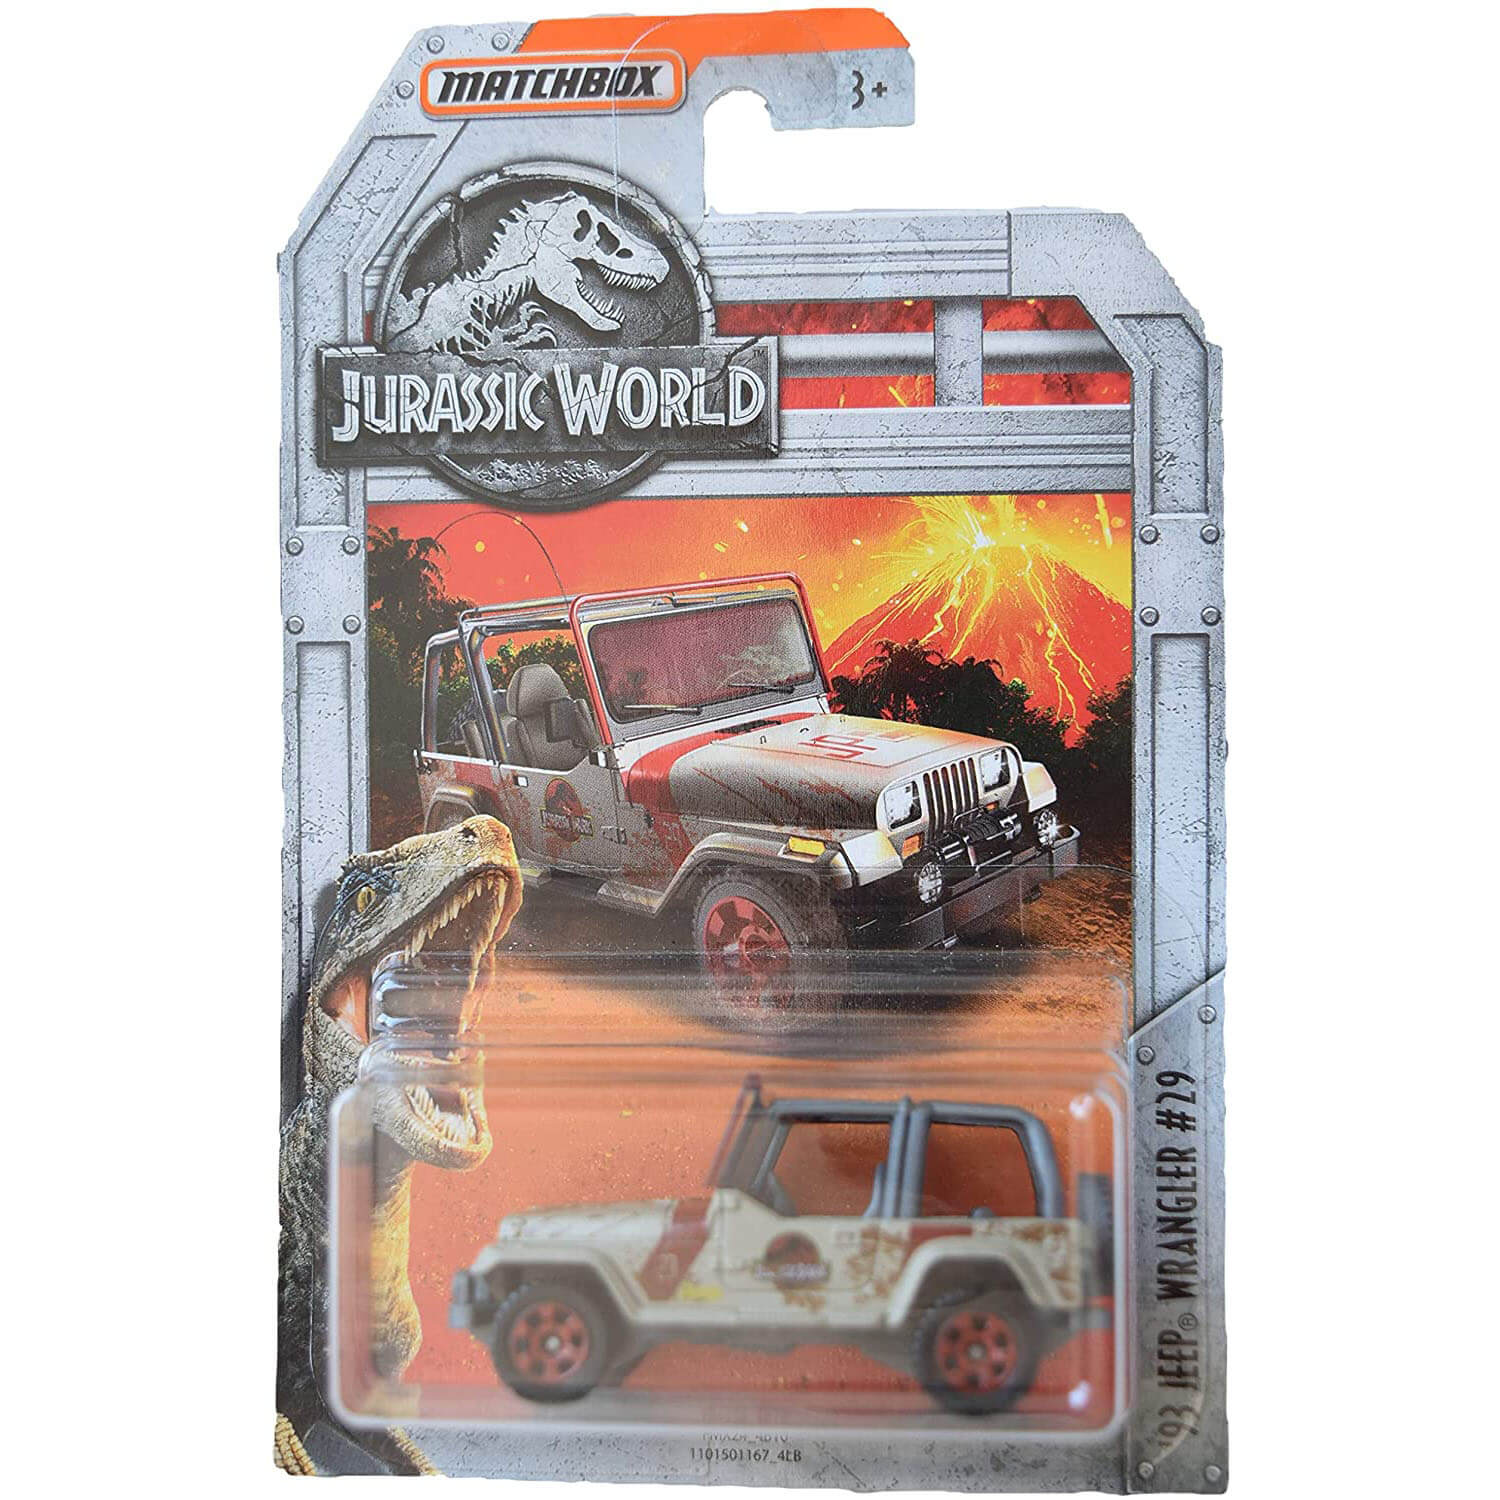 Matchbox Jurassic World Diecast Vehicle